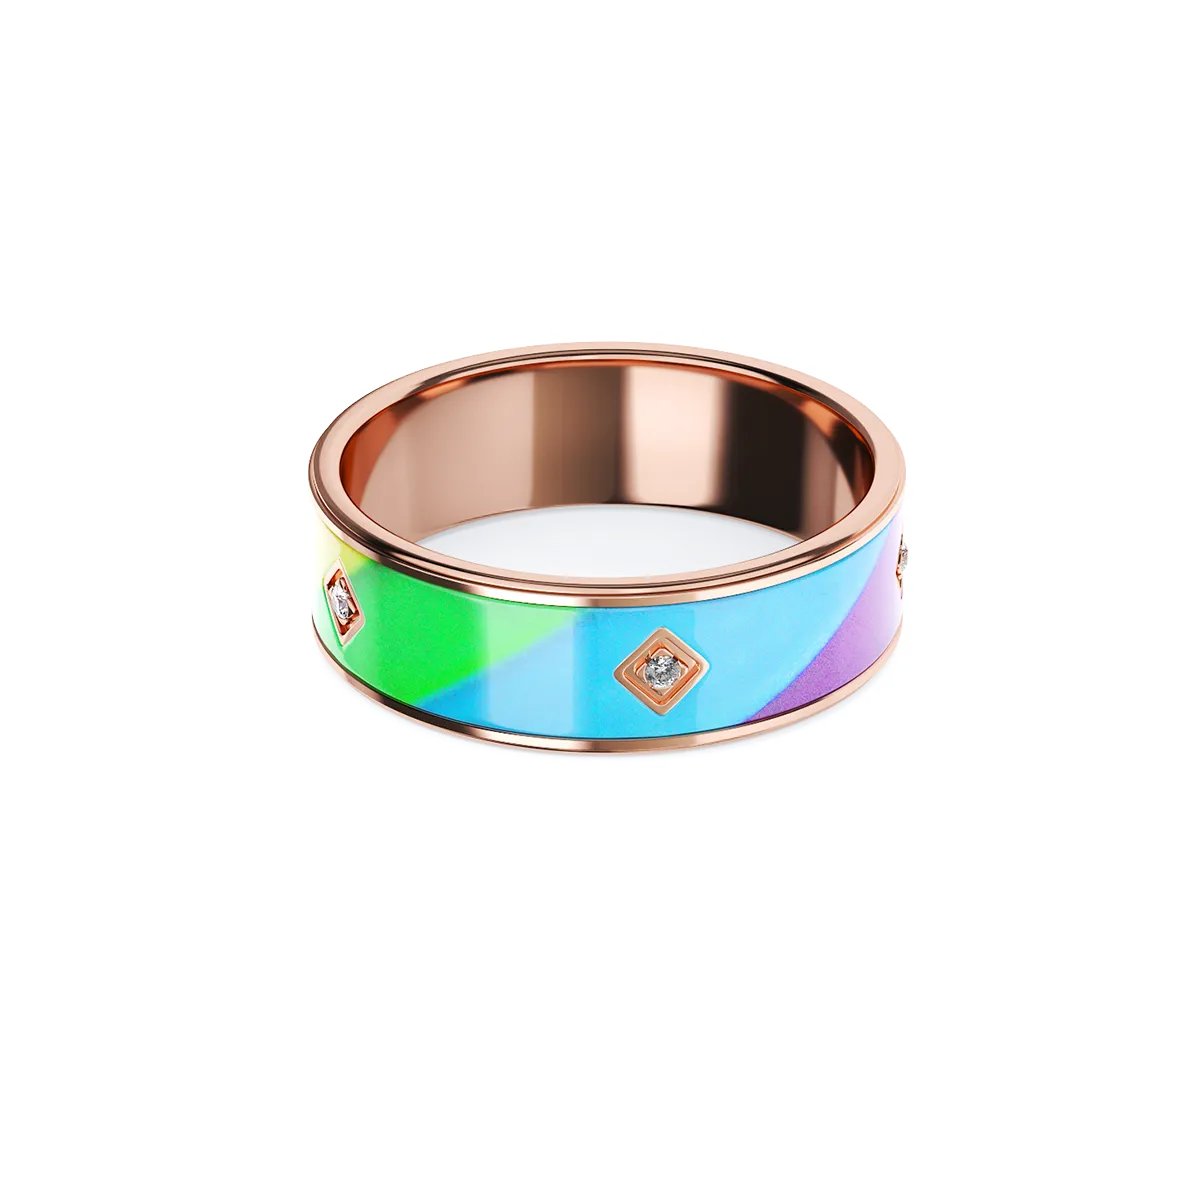 VIVID gold and ceramic wedding ring